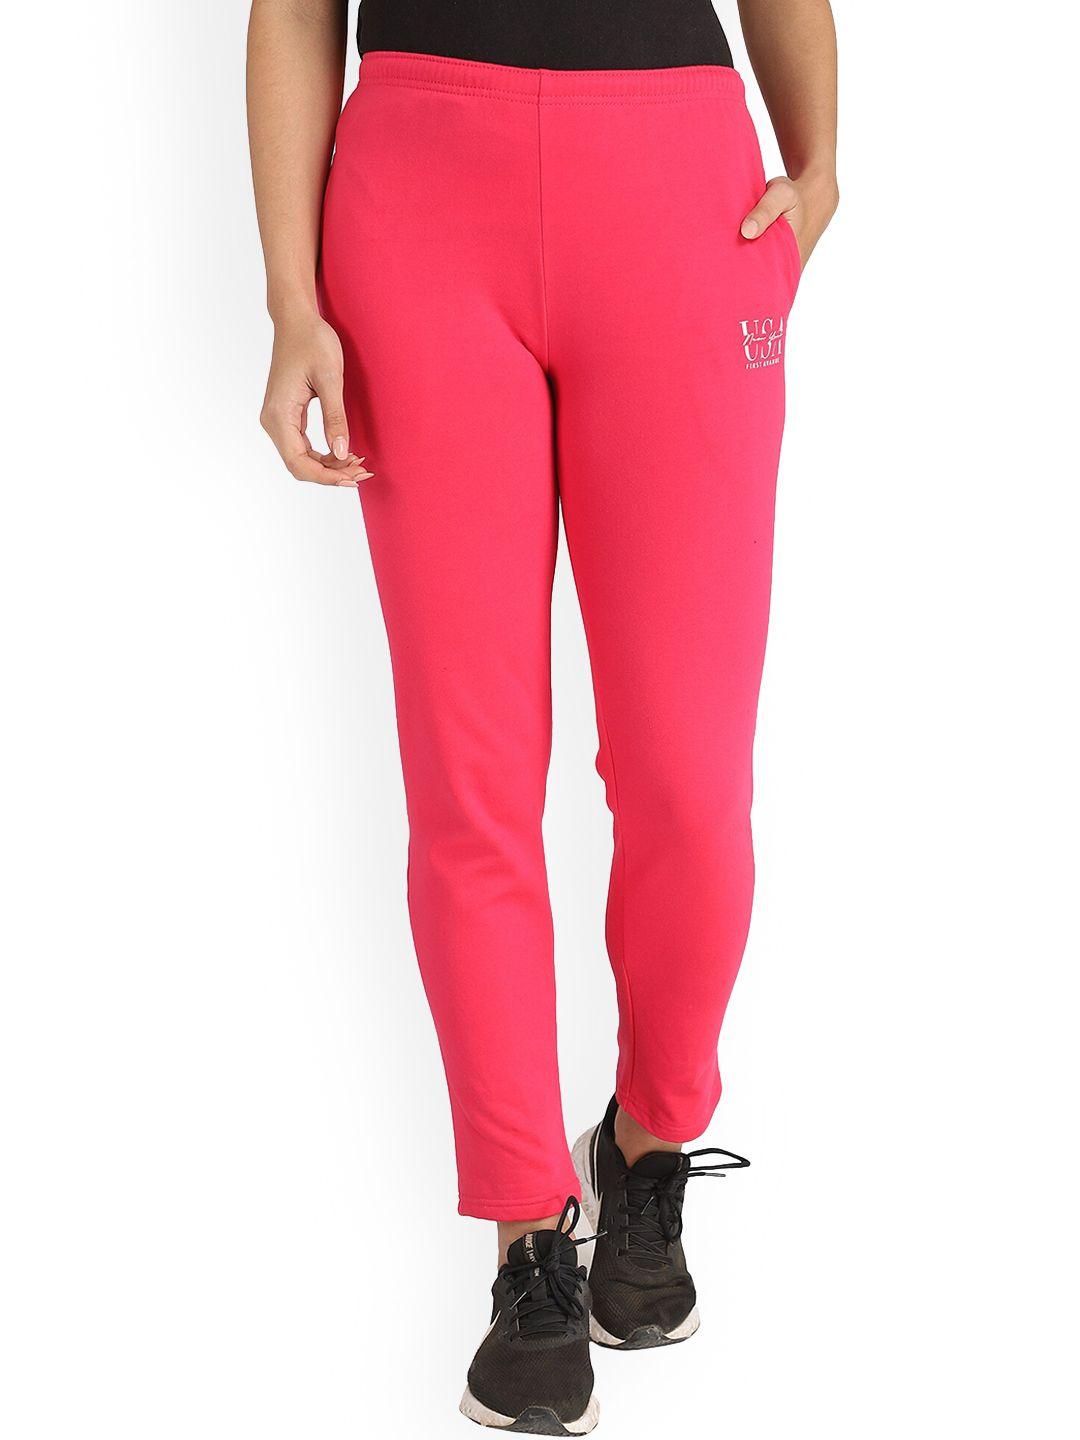 dyca women fuchsia pink solid cotton track pants